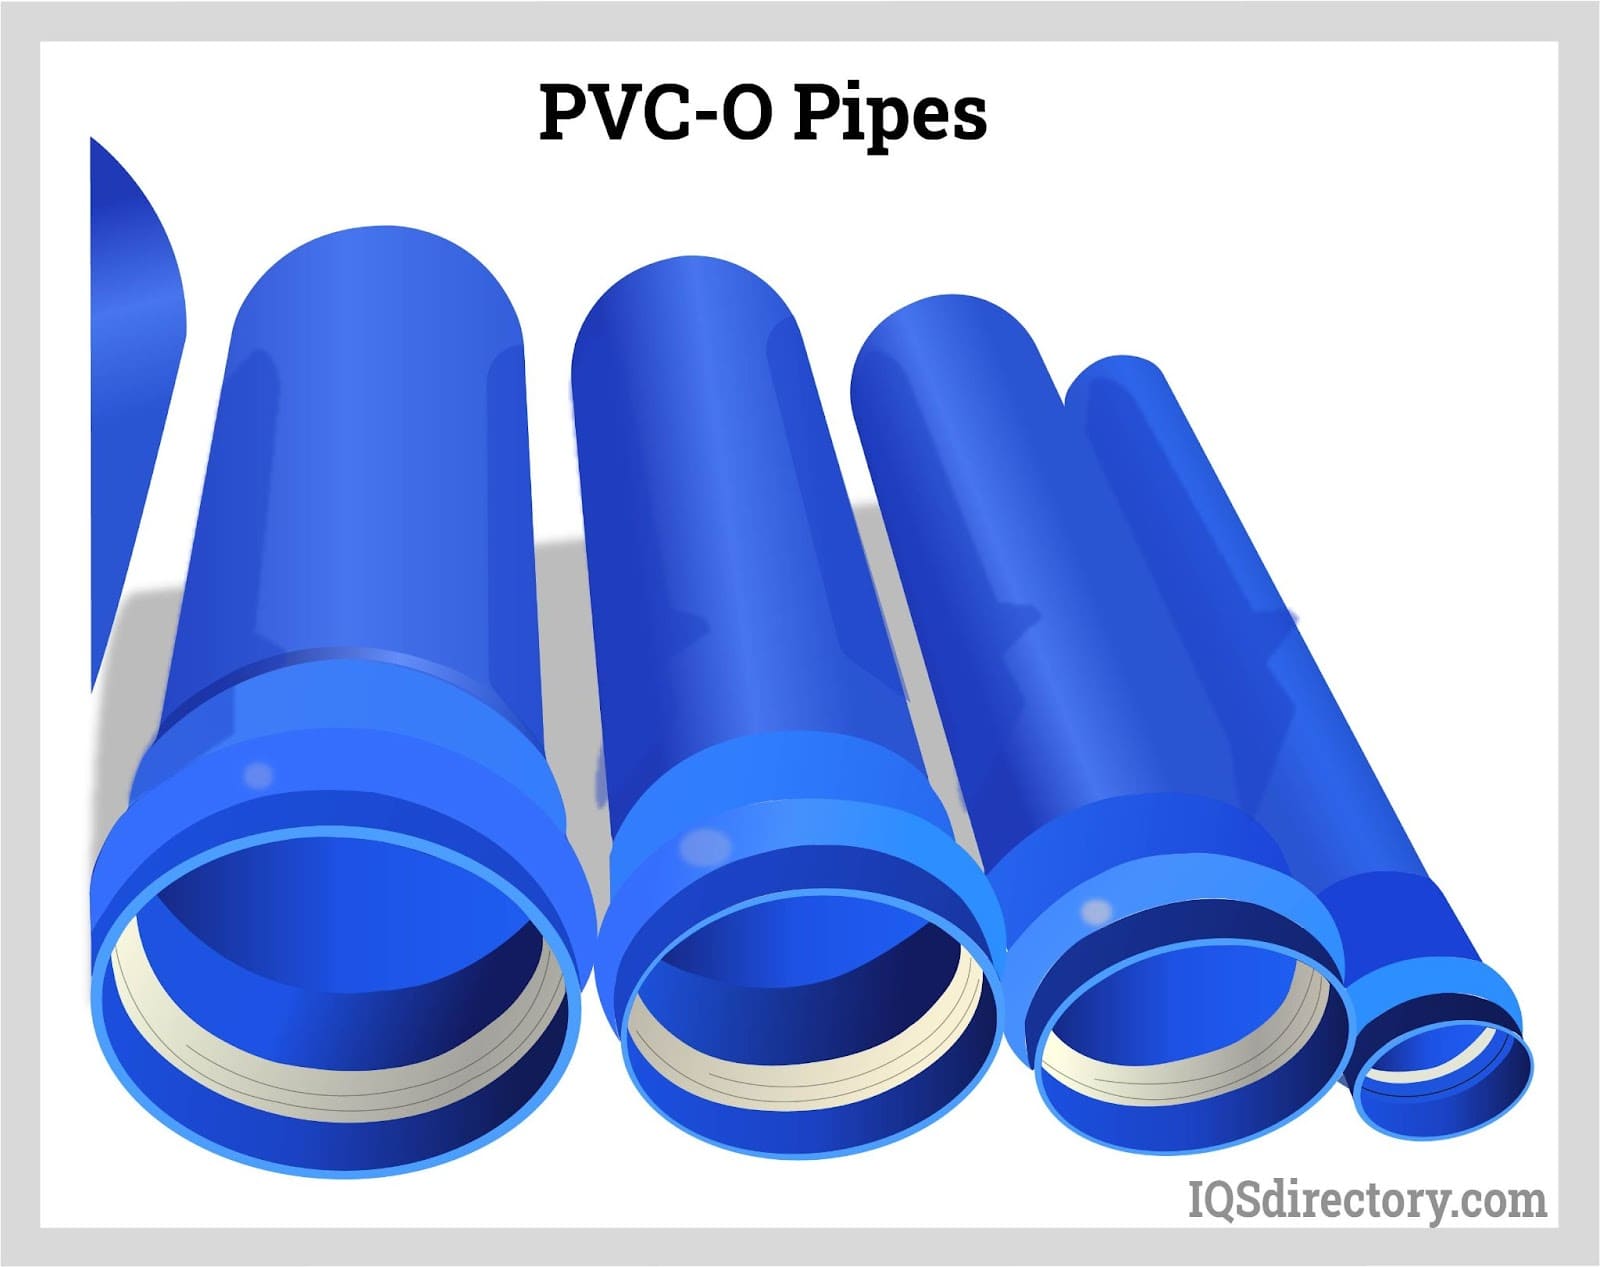 PVC-O Pipes